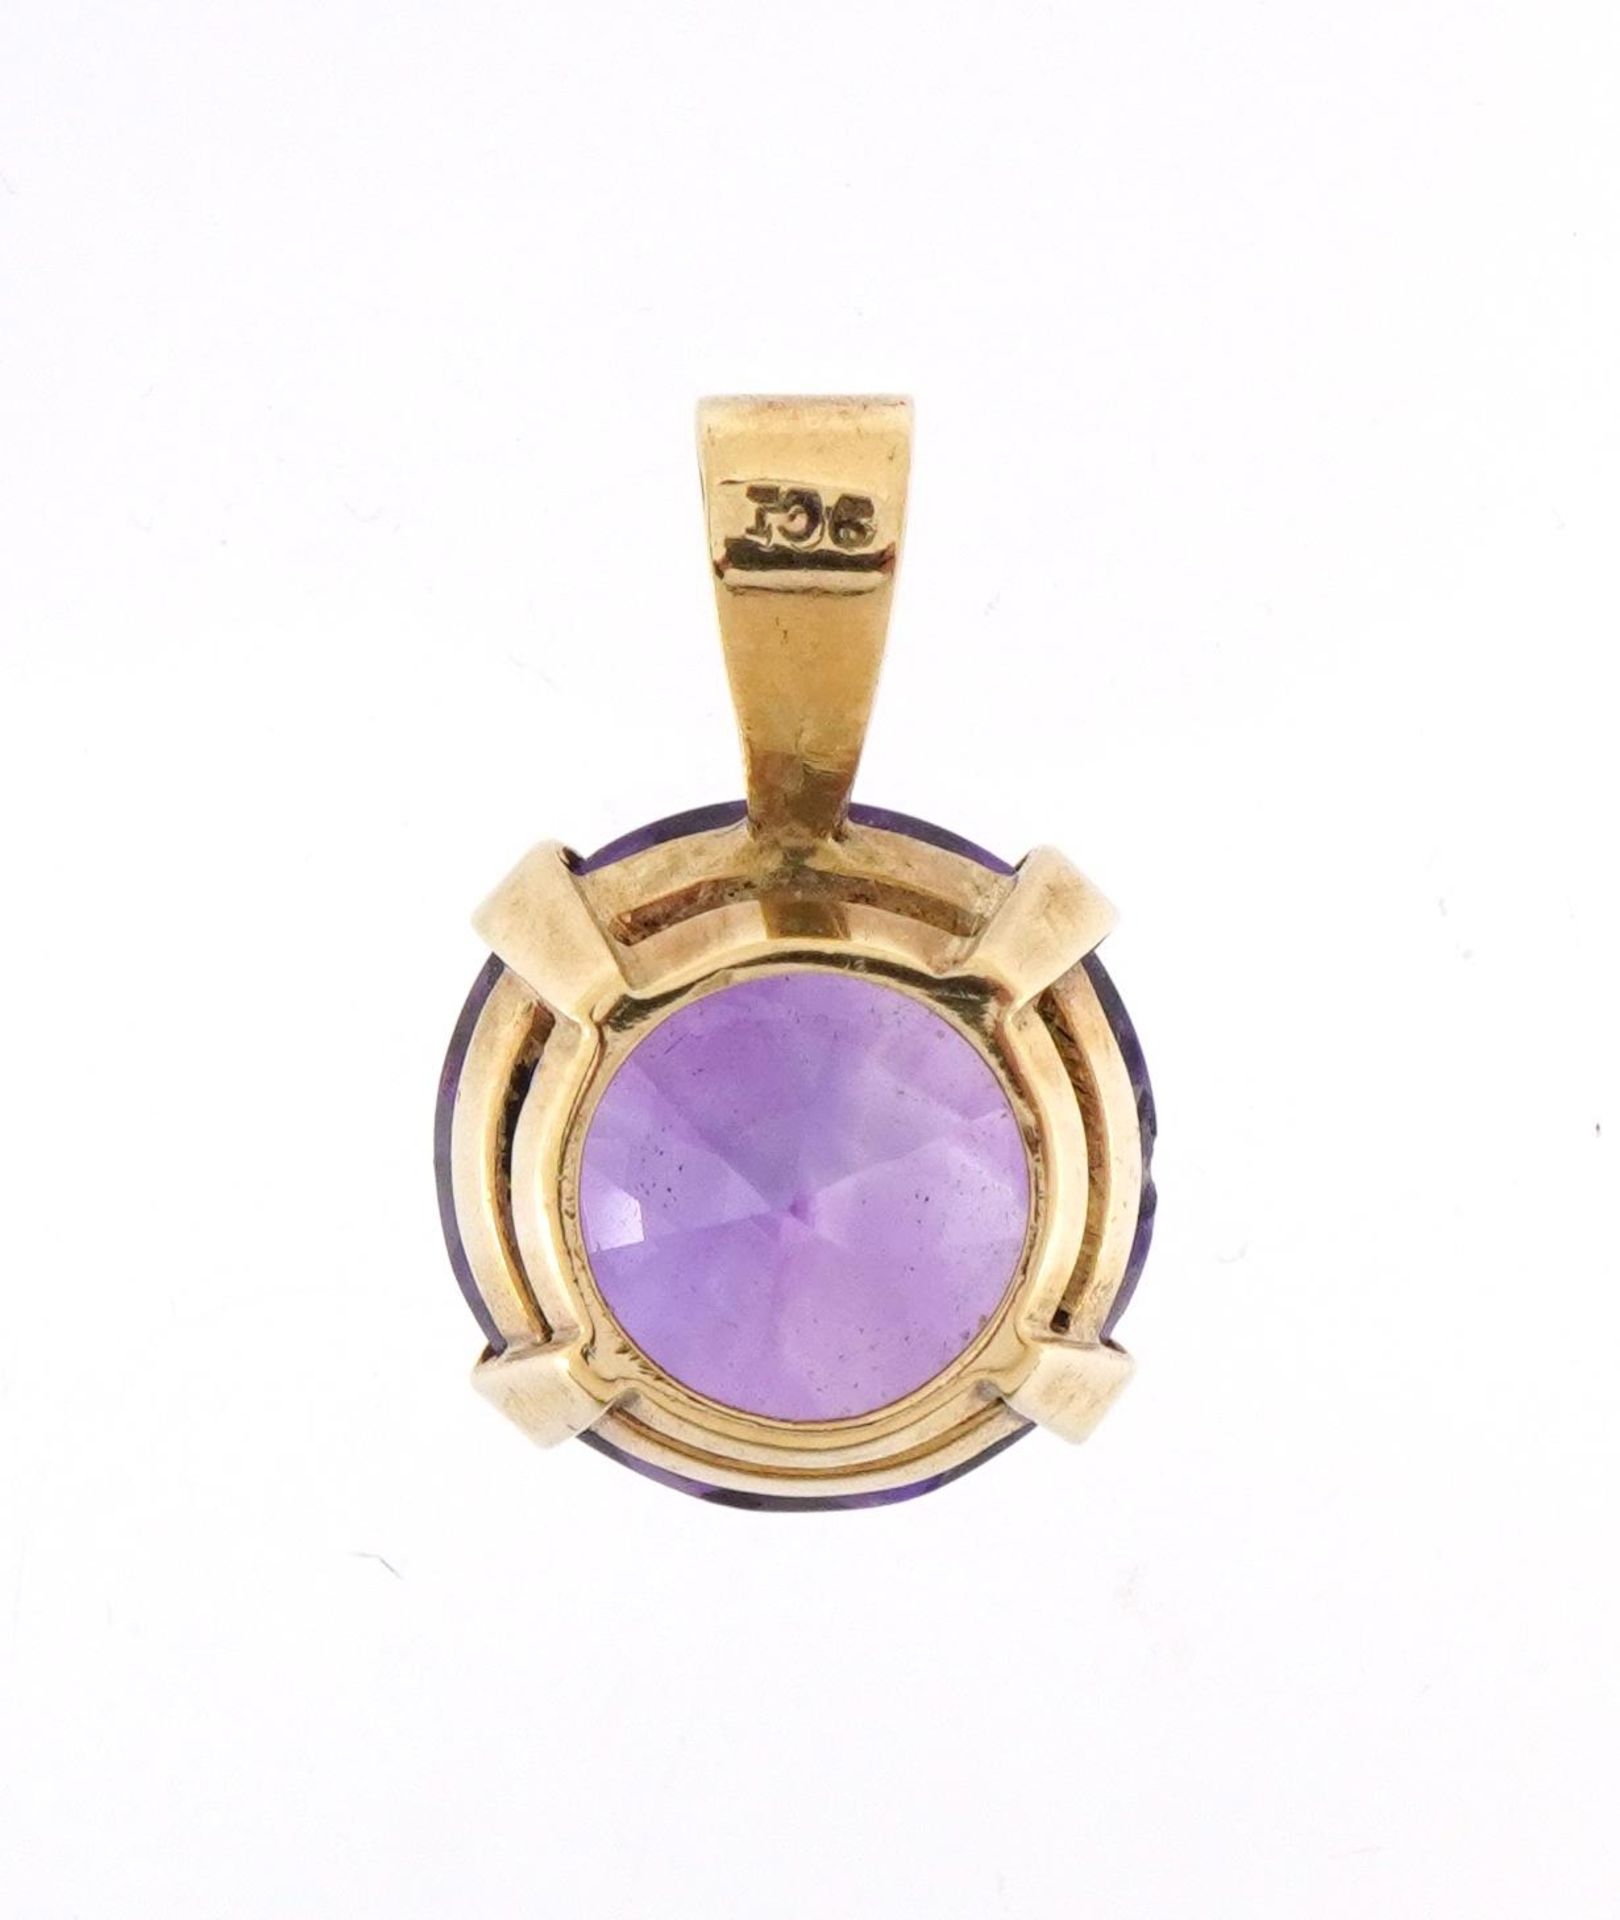 9ct gold purple stone solitaire pendant, possibly amethyst, 1.9cm high, 2.6g - Bild 2 aus 3